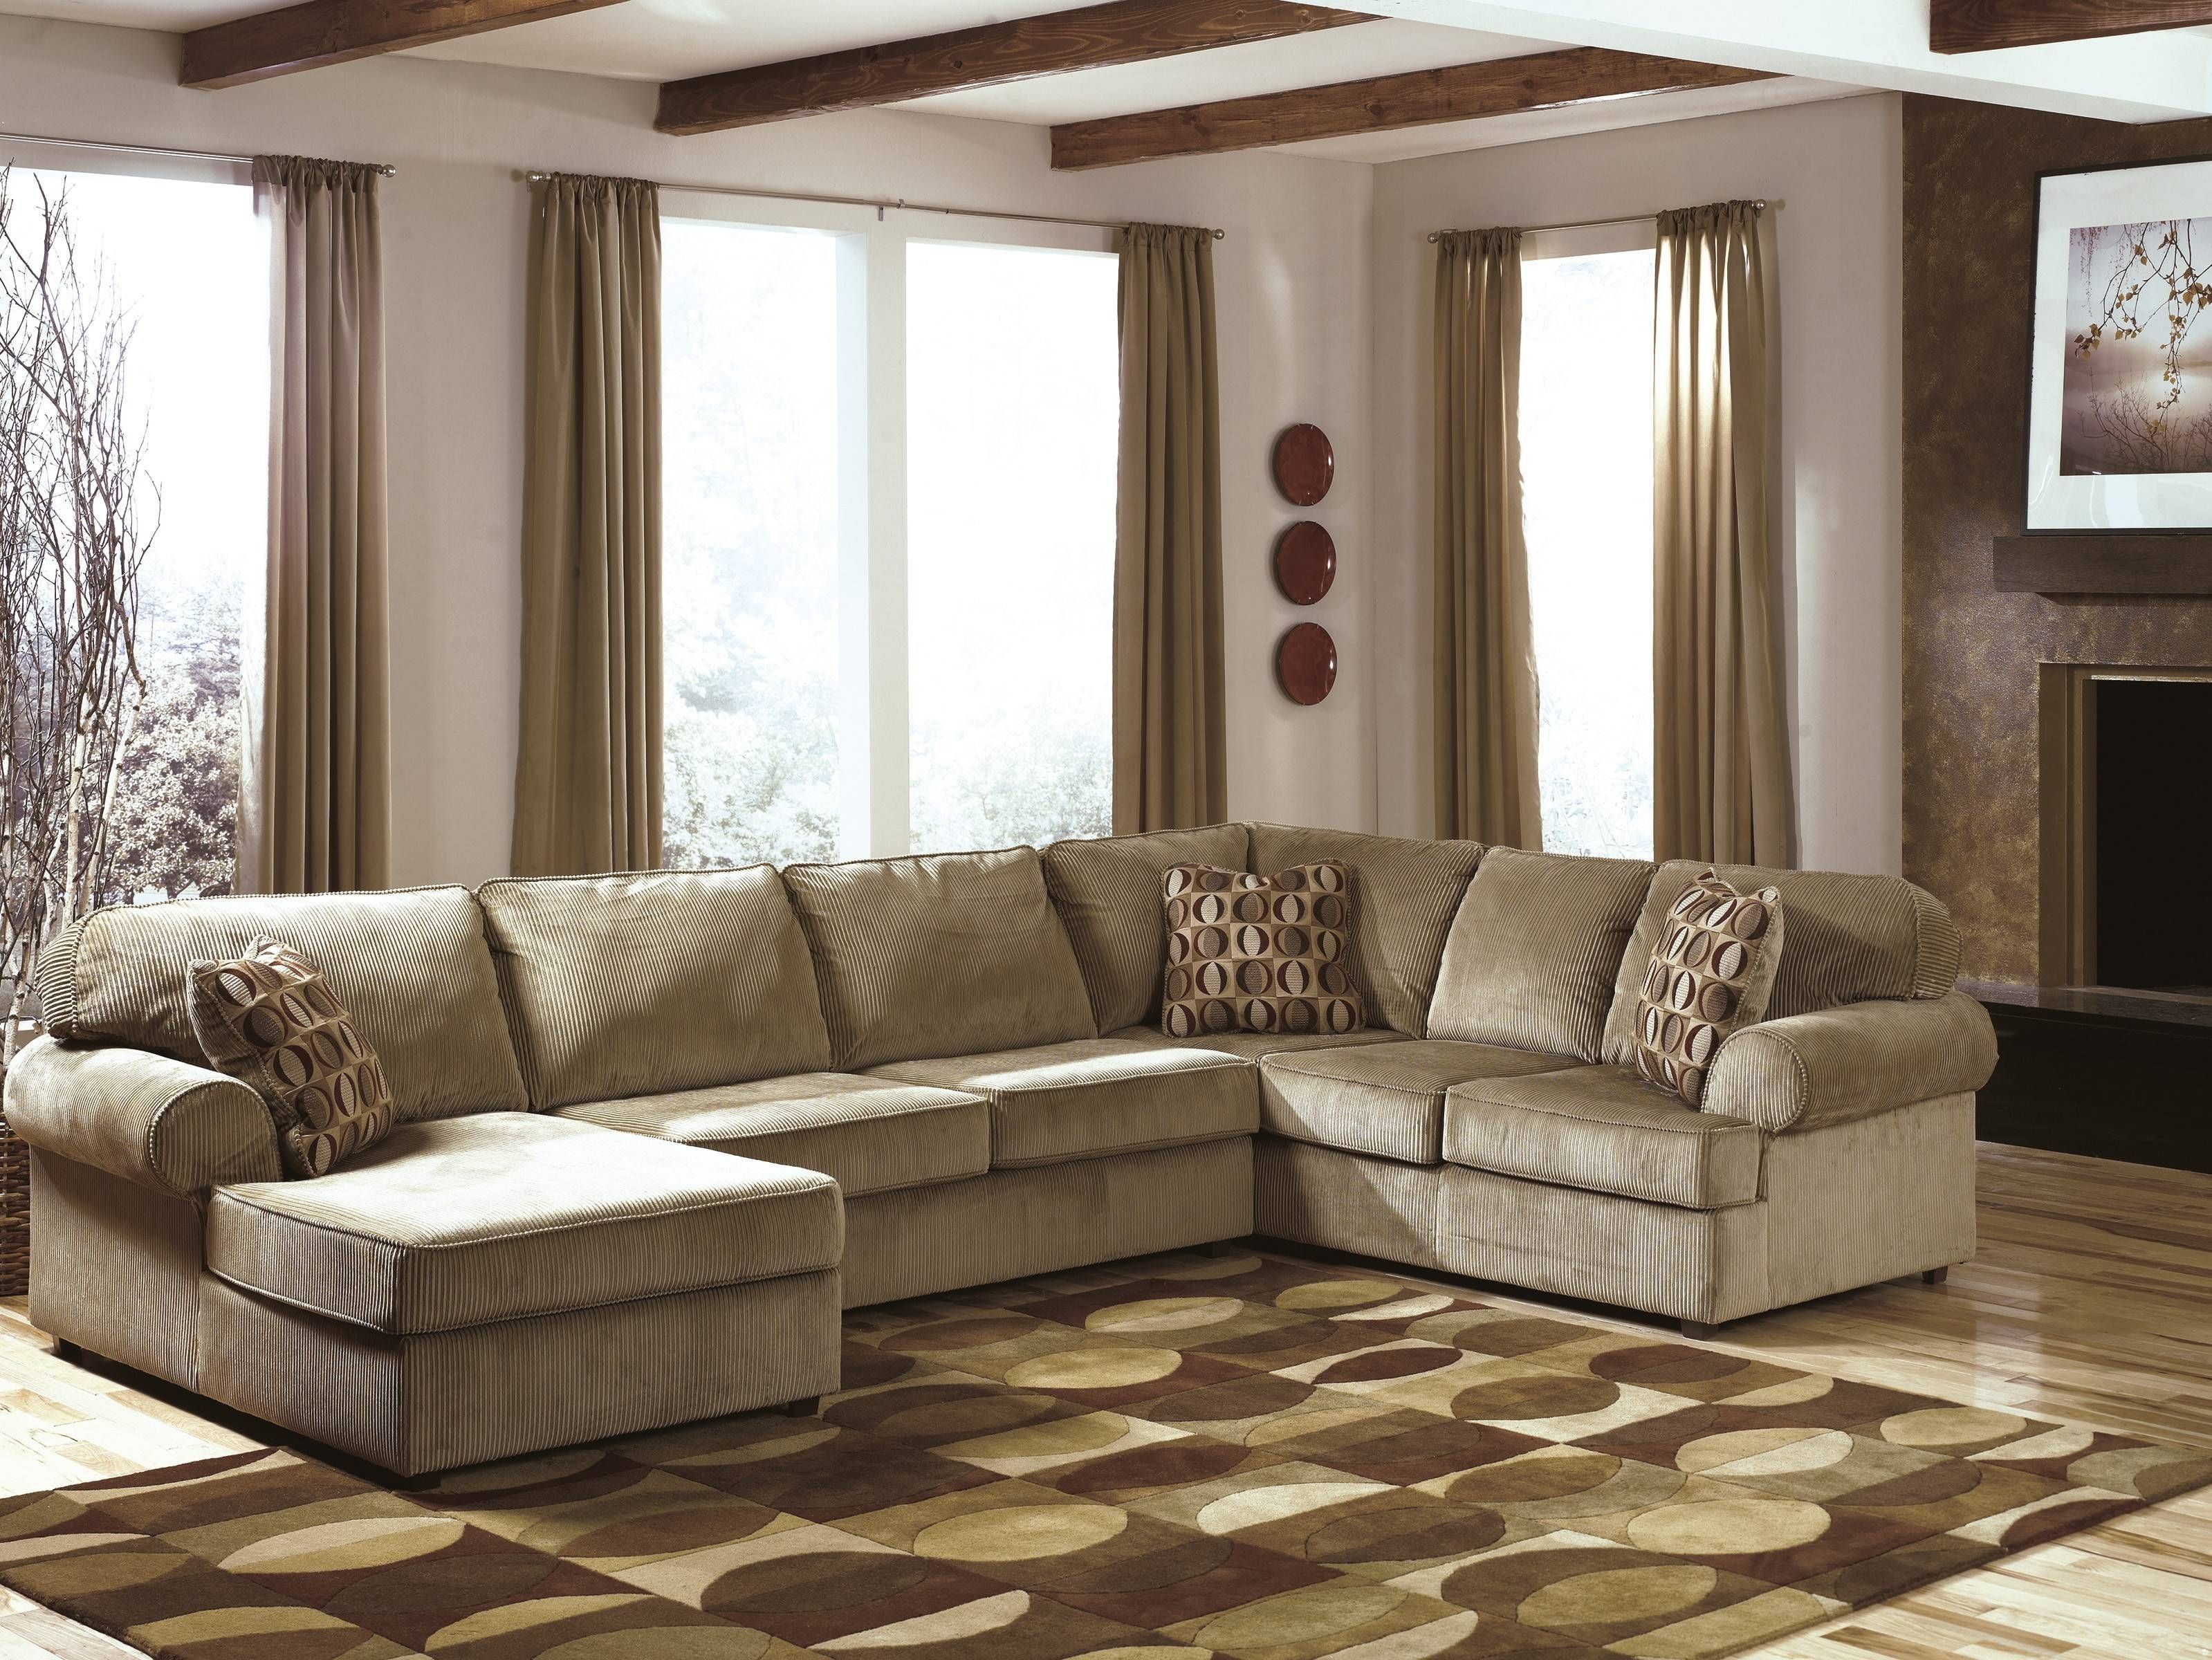 Astonishing Custom Sectional Sofa Design 35 On C Shaped Sofa With Regard To C Shaped Sofas (View 11 of 30)